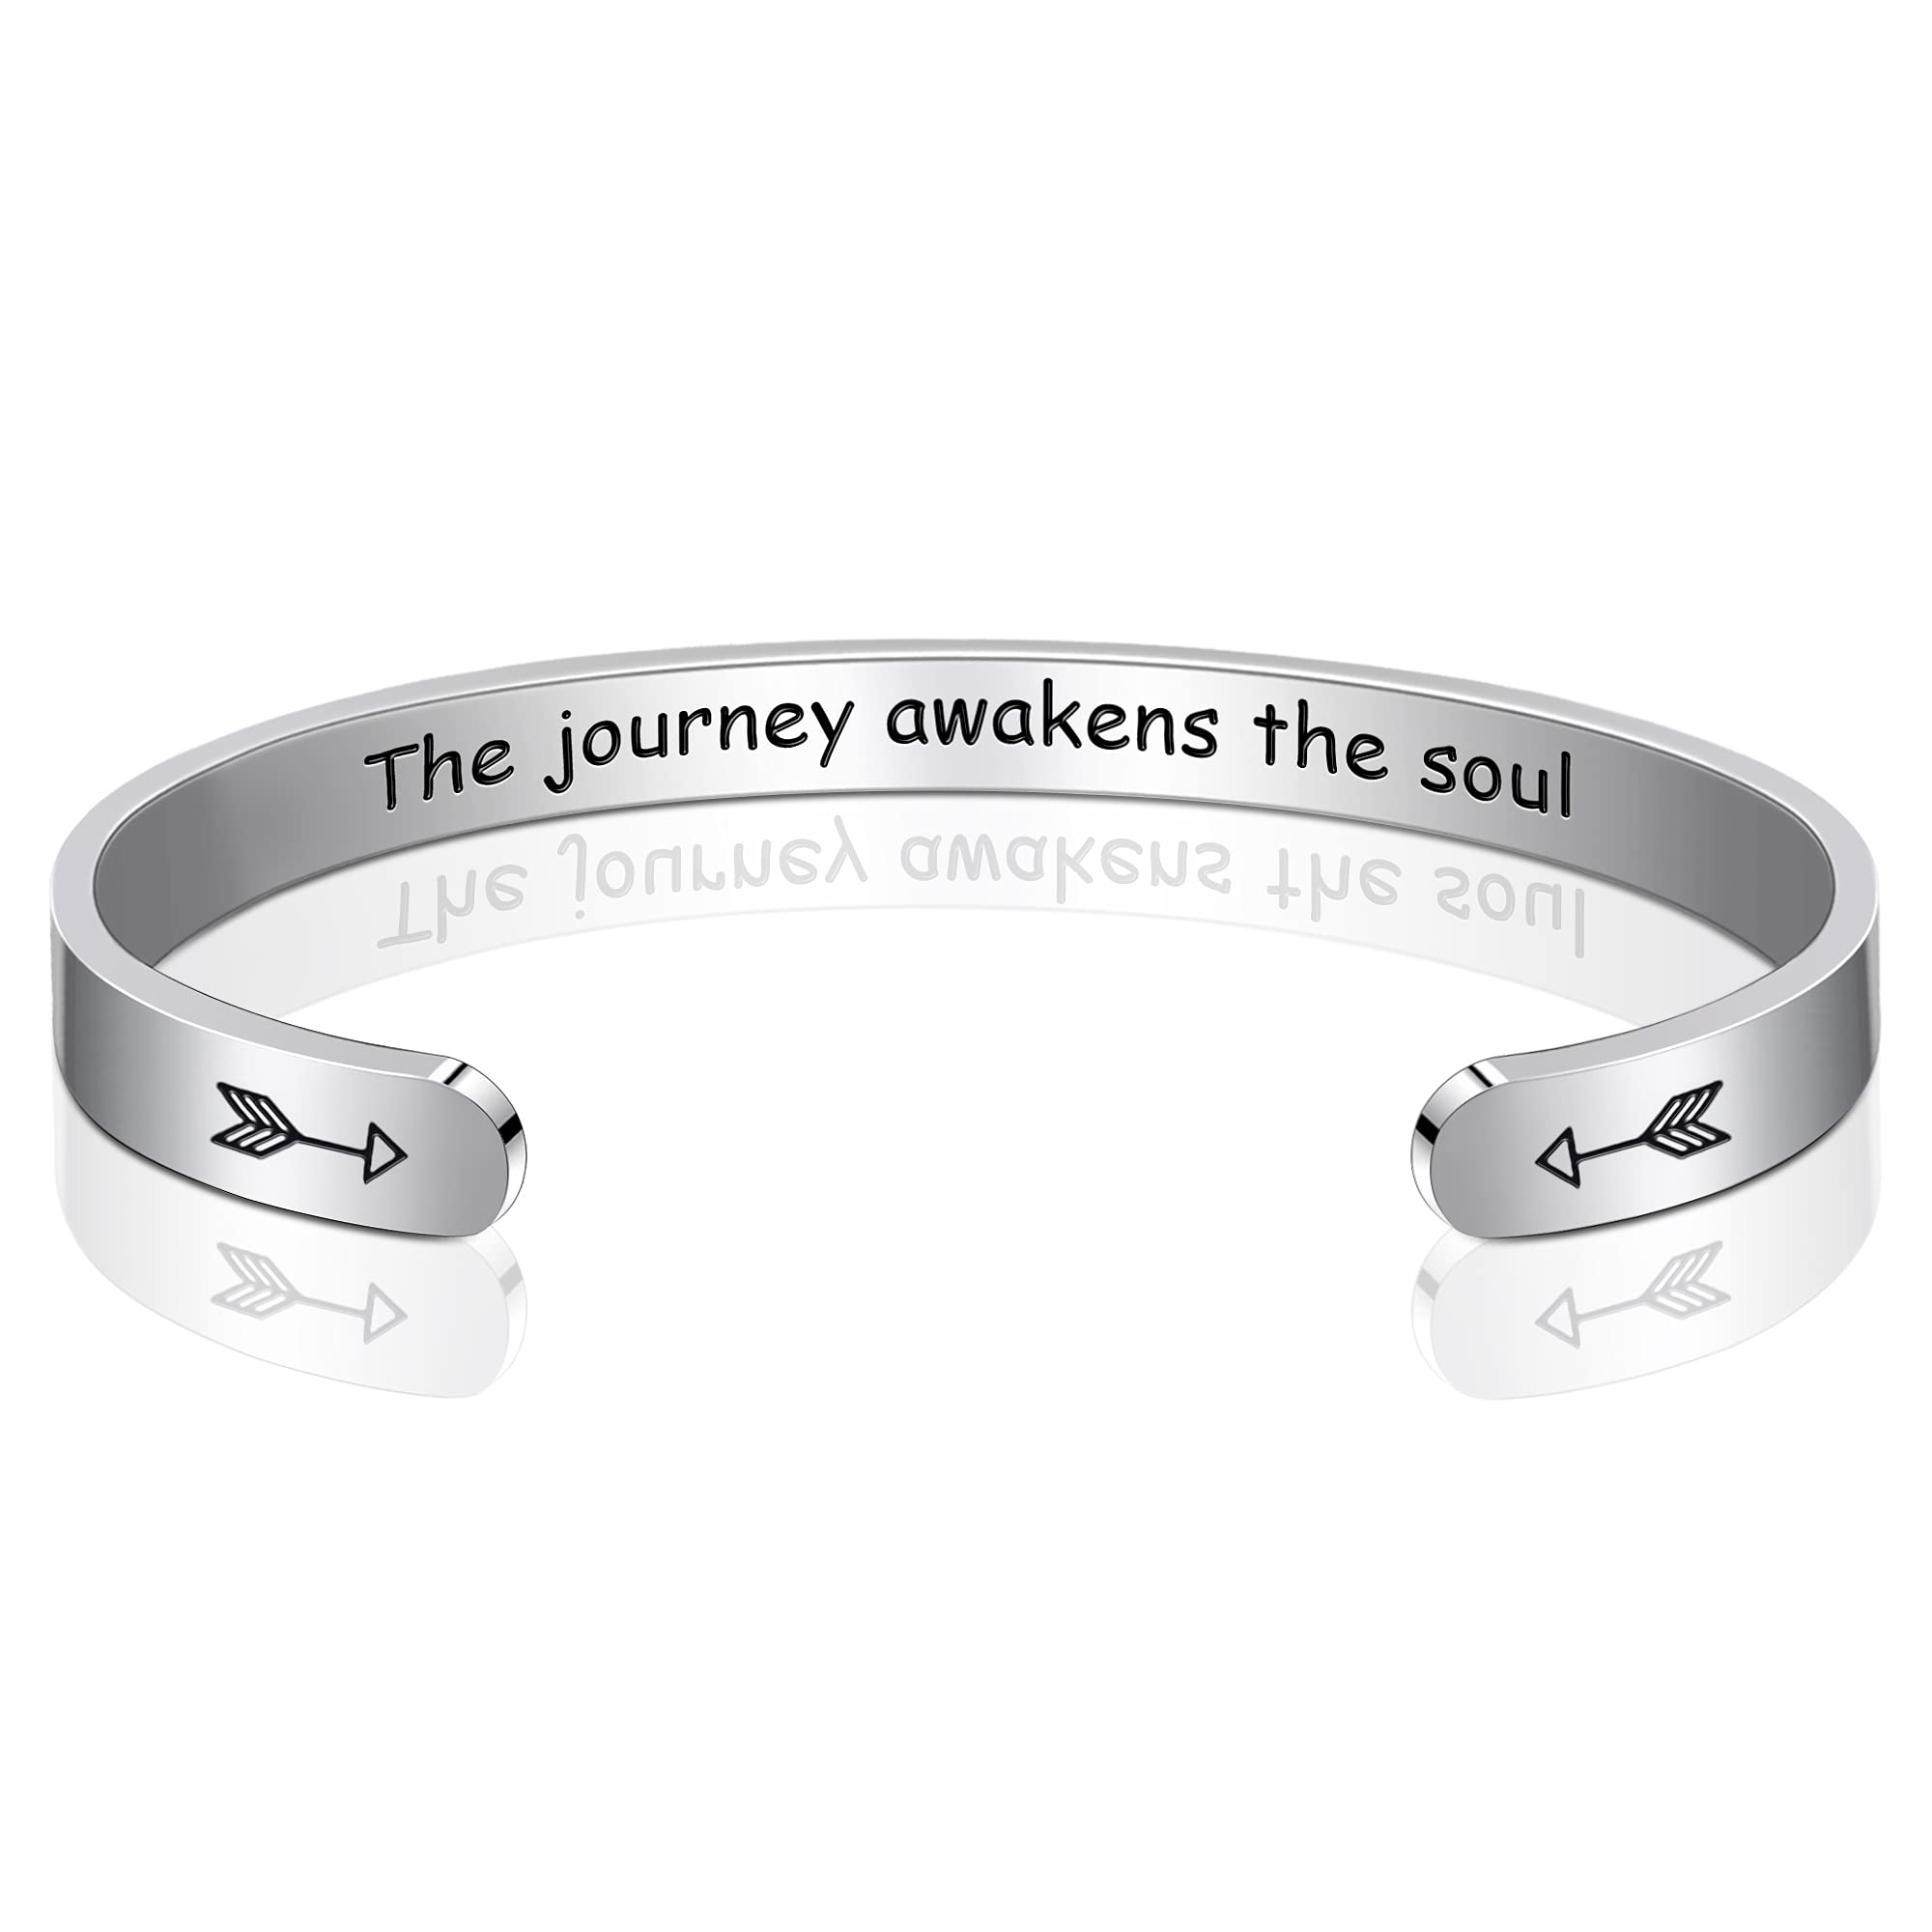 The journey awakens the soul